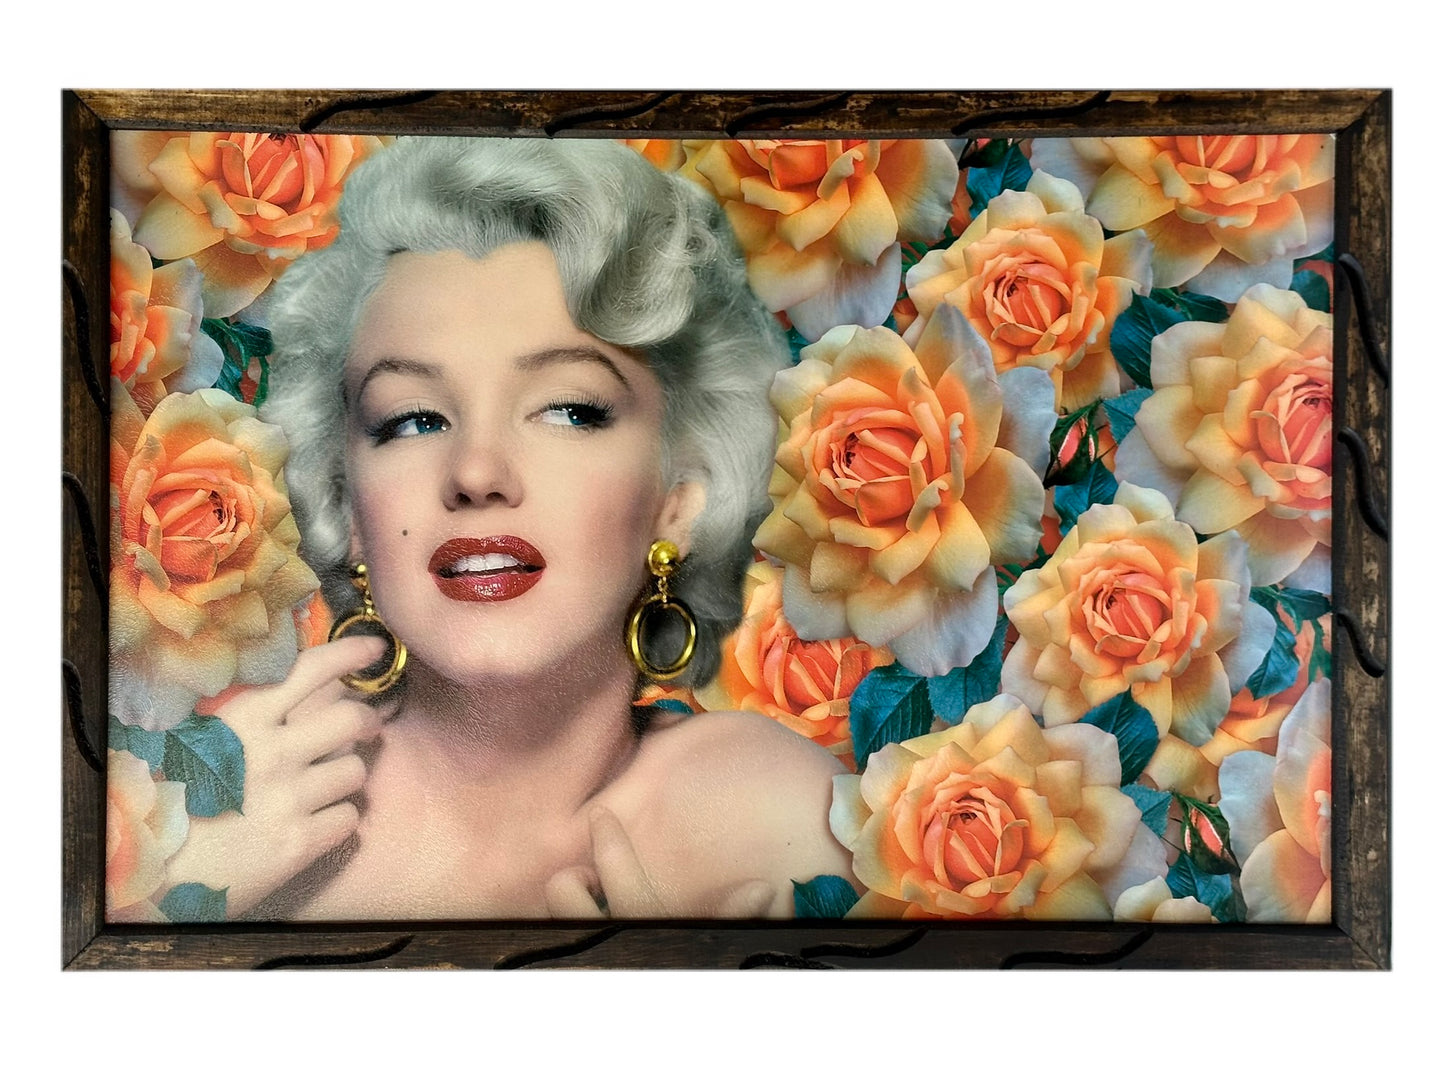 Marco de fotos con cara de Marilyn Monroe de 24 x 36 pulgadas con flores